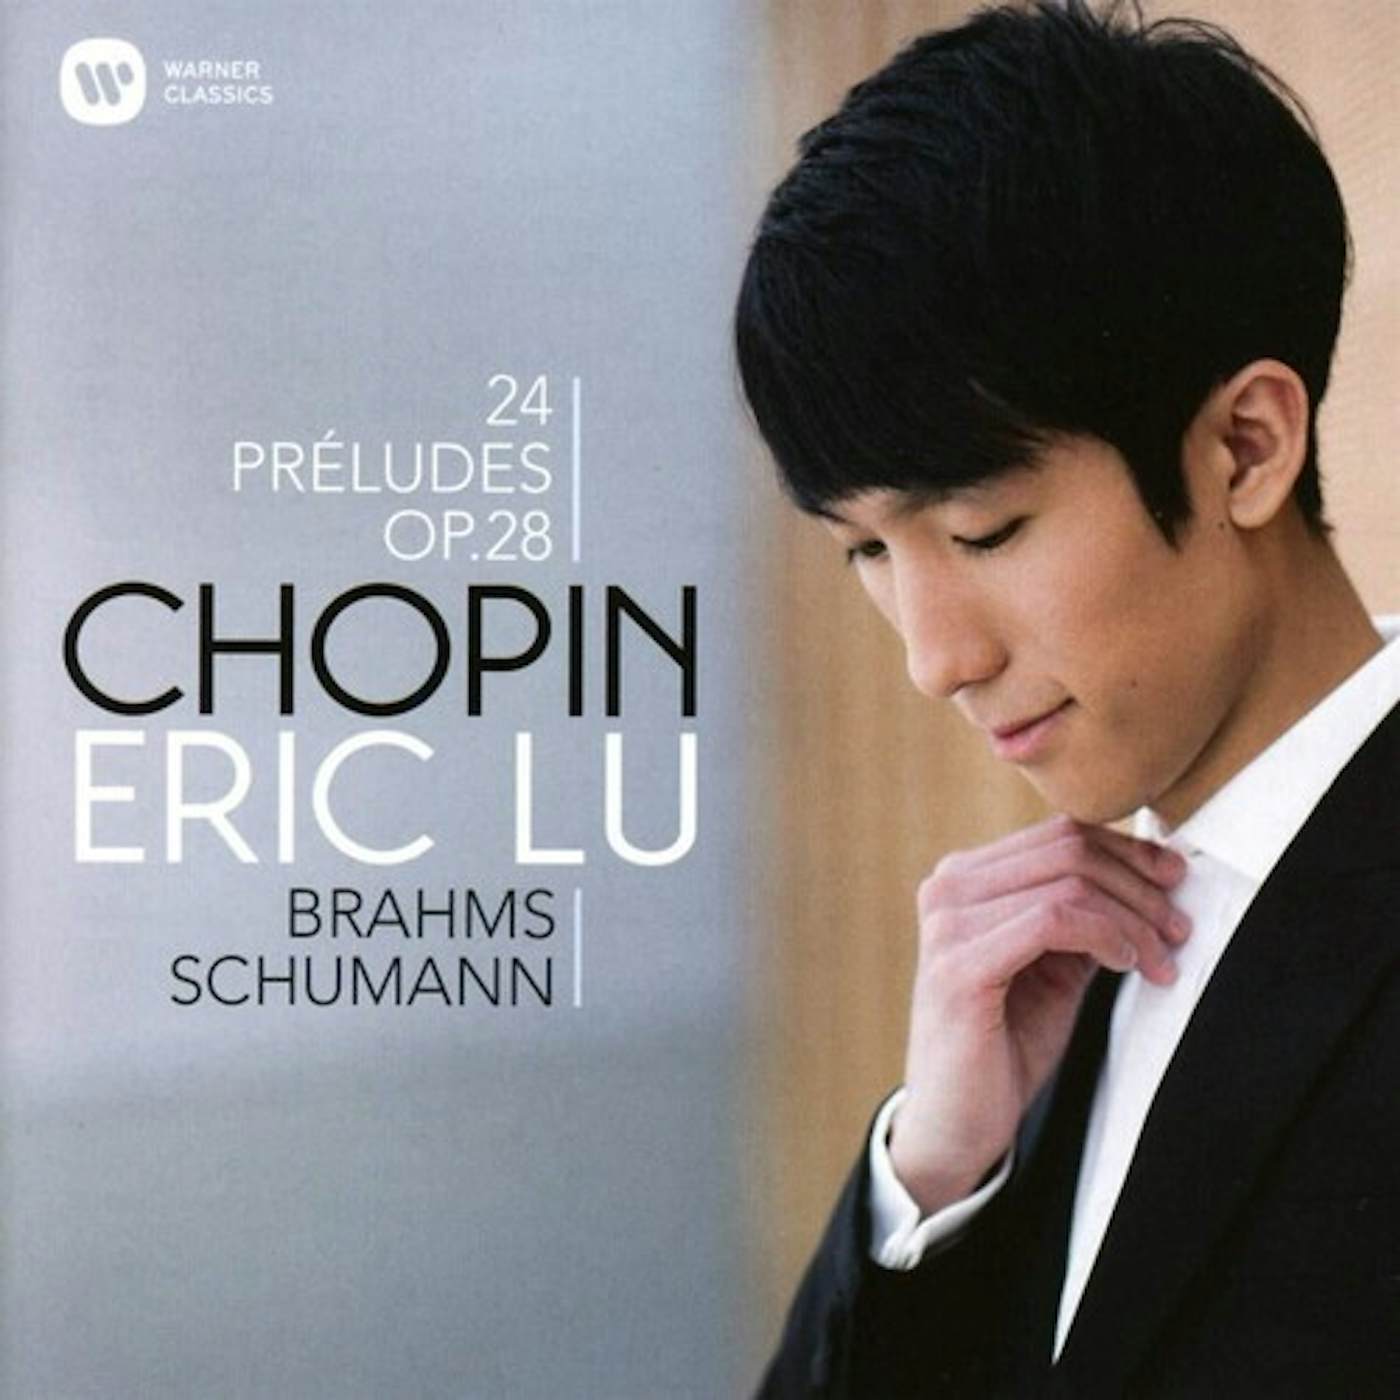 Eric Lu CHOPIN BRAHMS SCHUMANN 24 PRELUDES OP. 28 CD